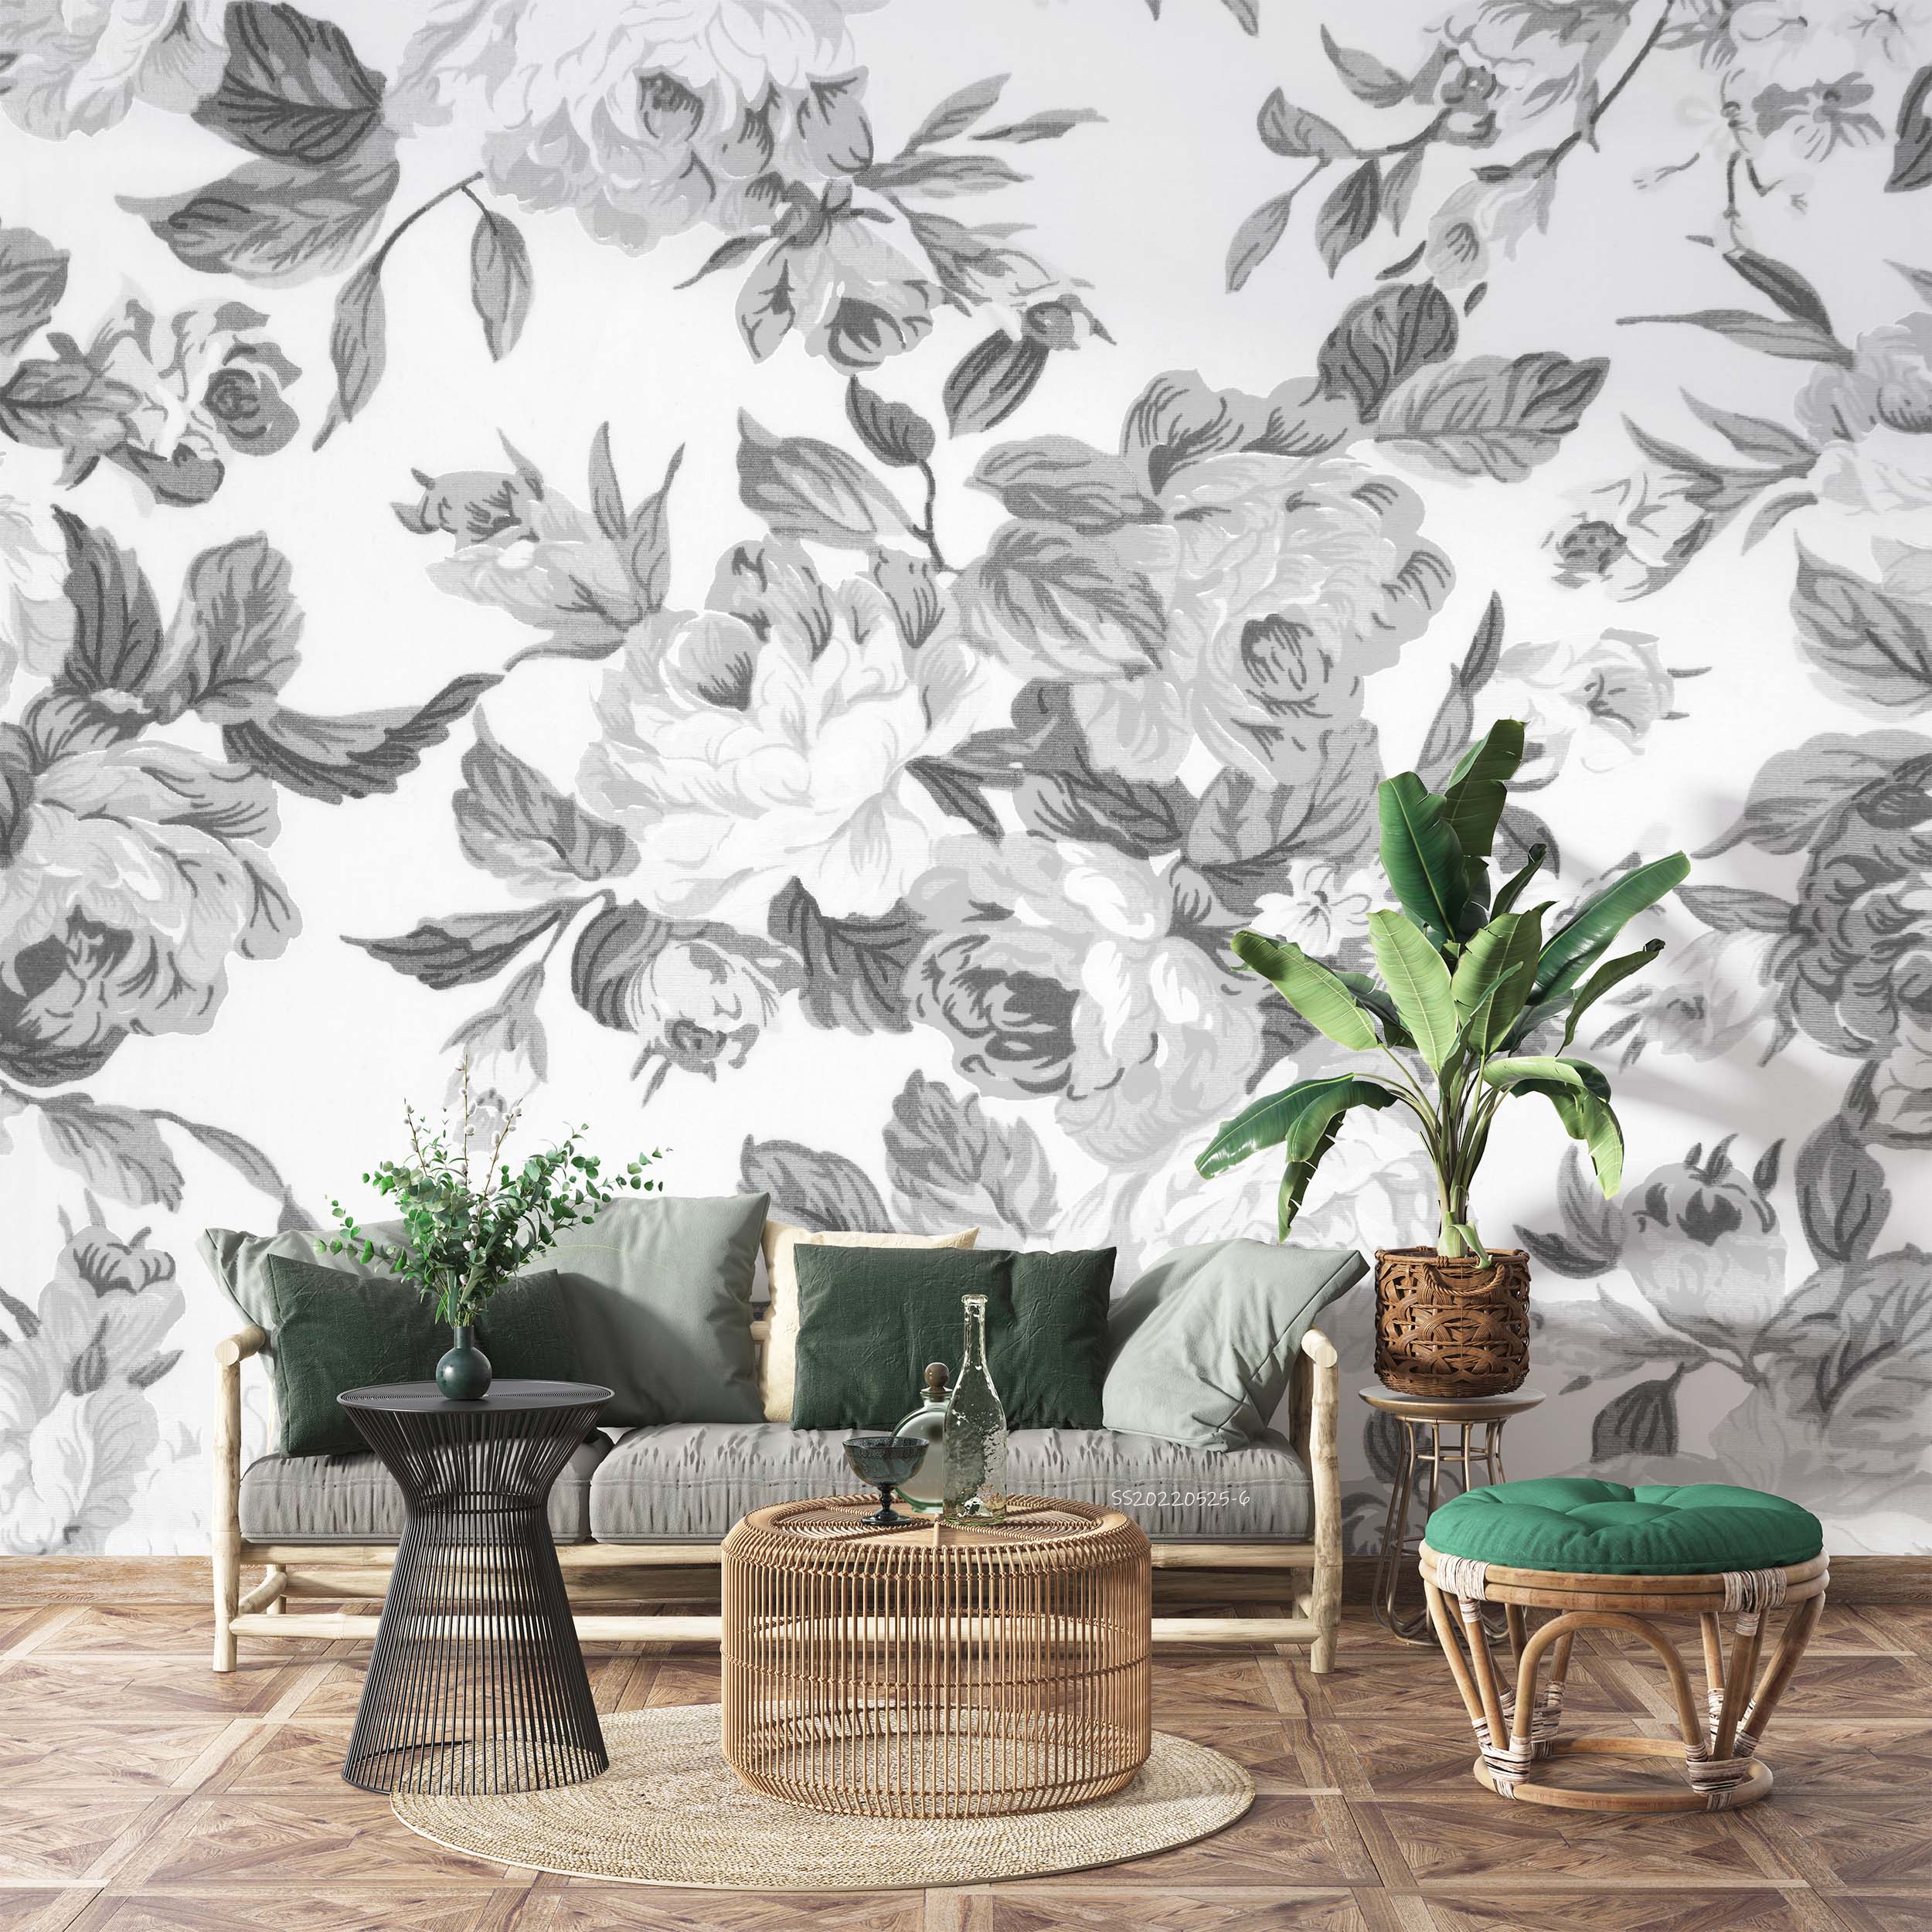 3D Vintage Floral Background Black White Wall Mural Wallpaper GD 1307- Jess Art Decoration